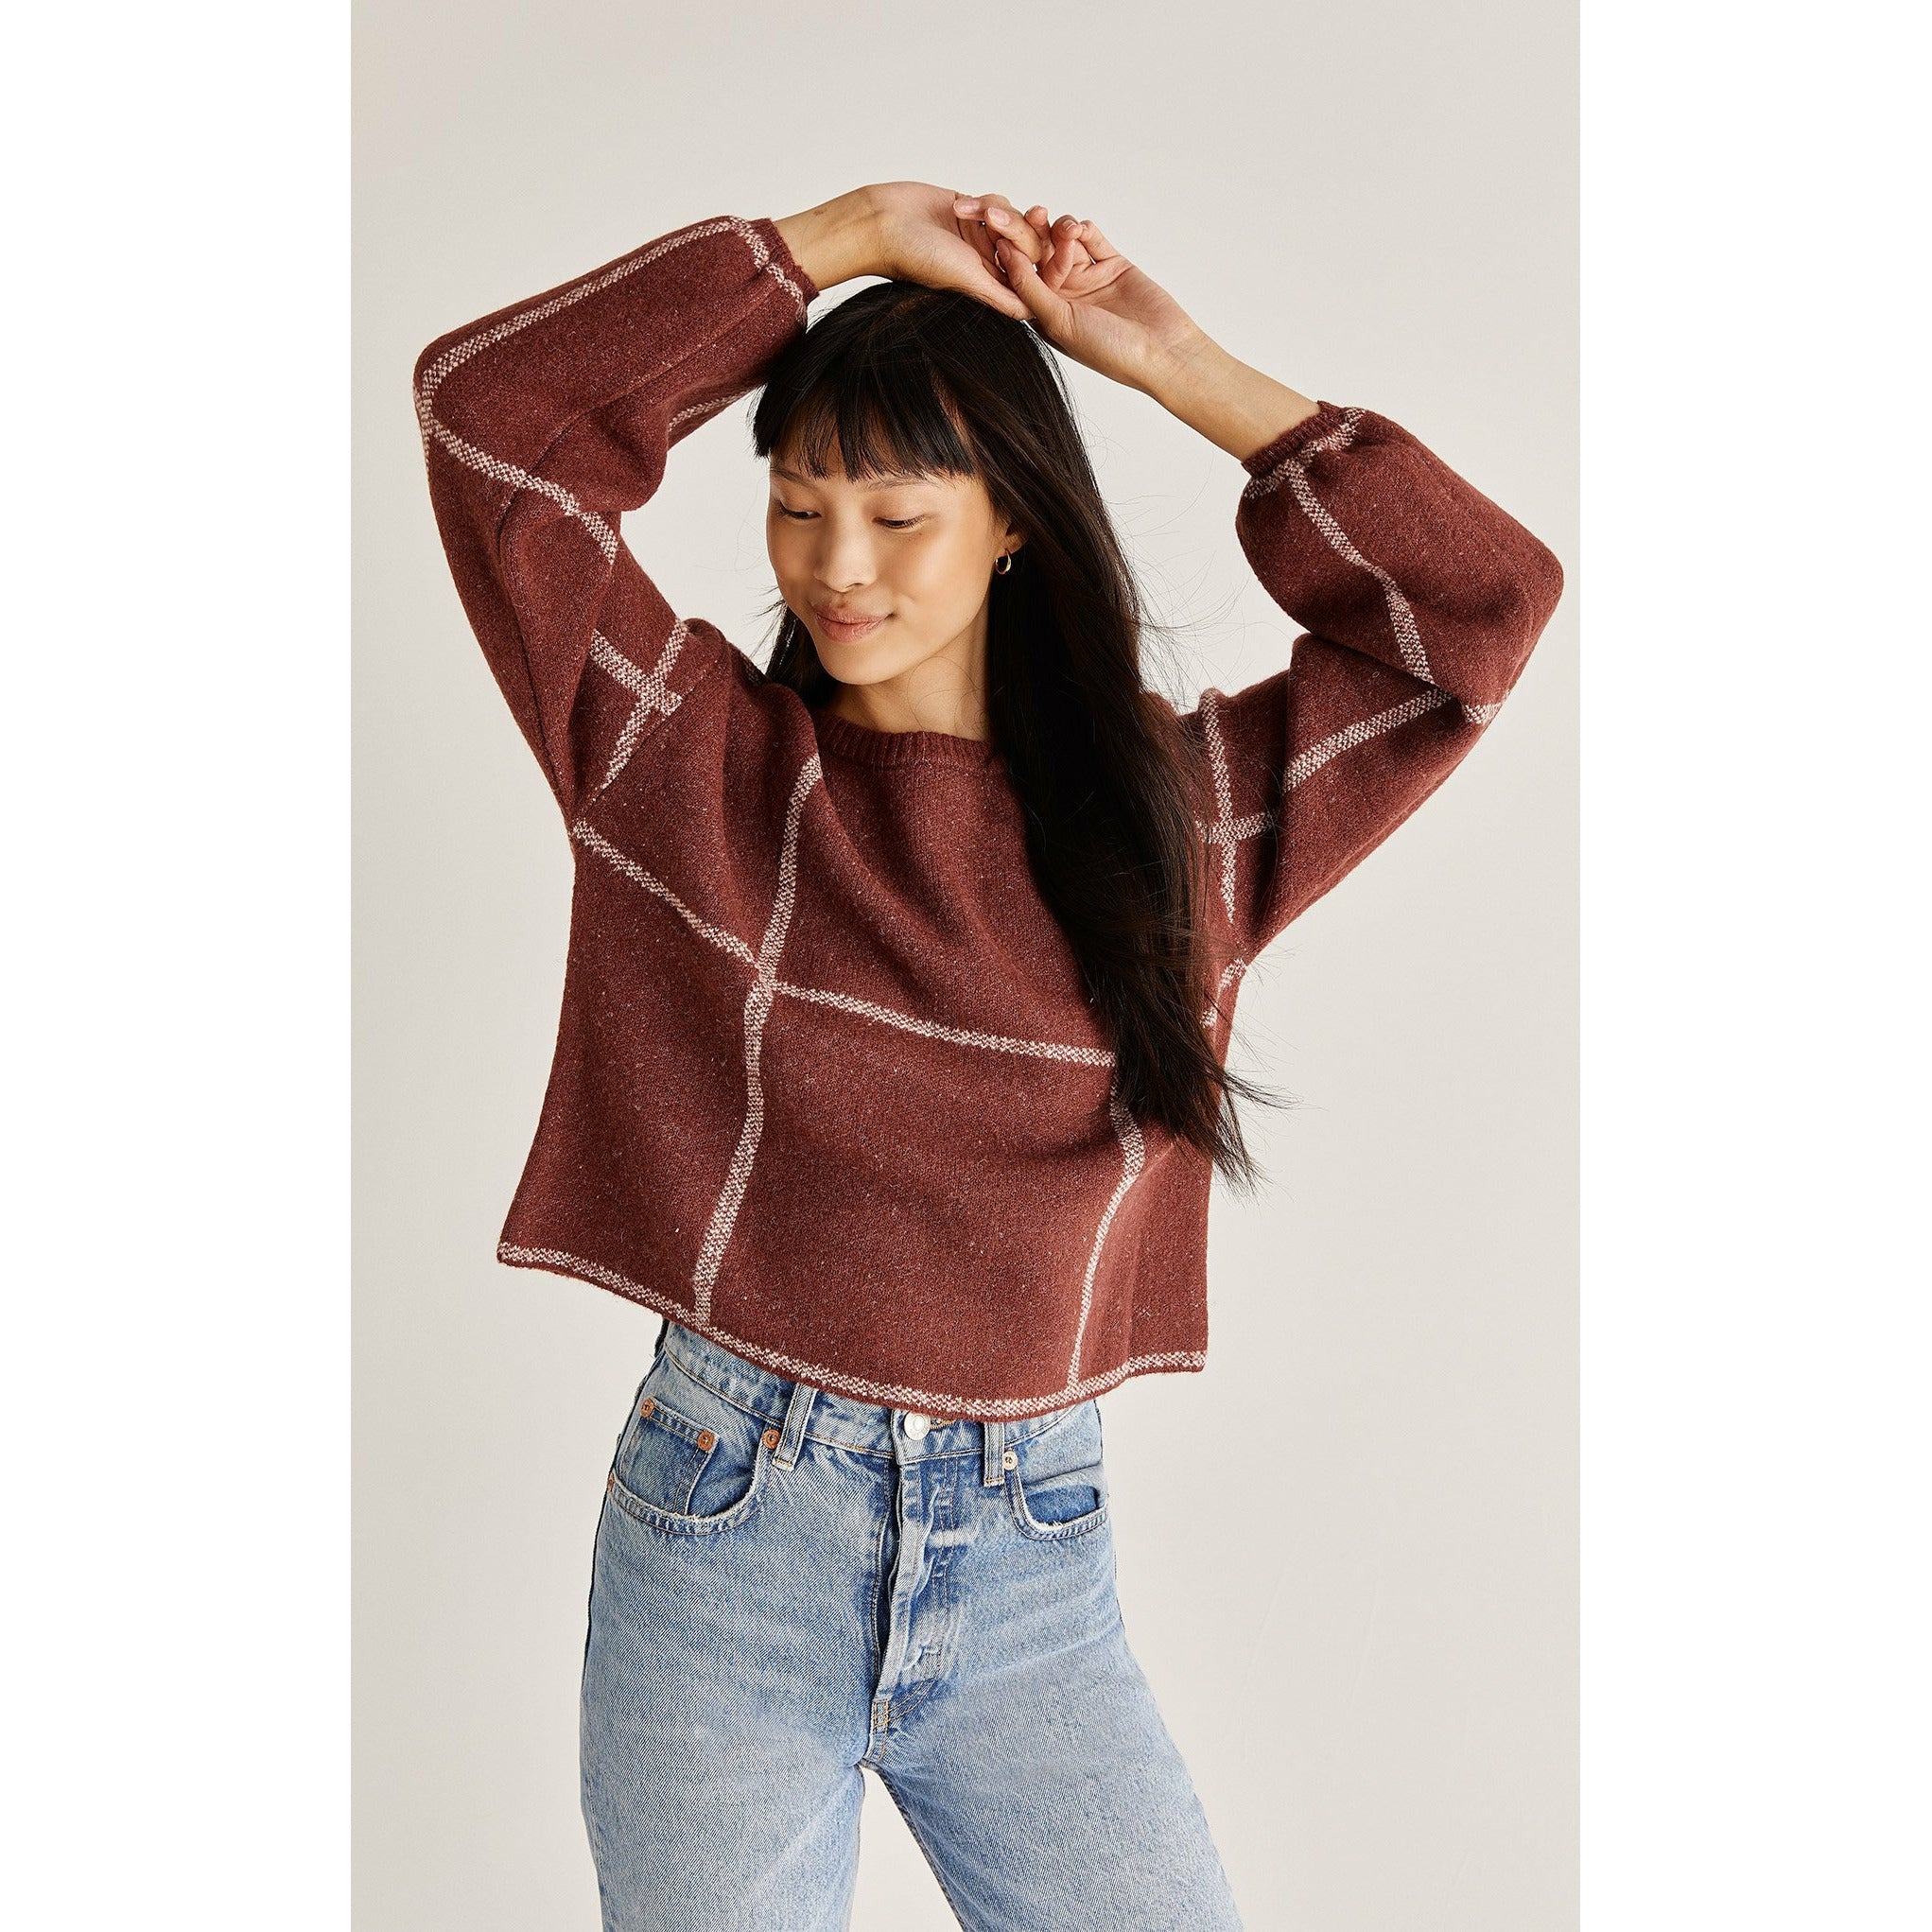 Solange Plaid Sweater